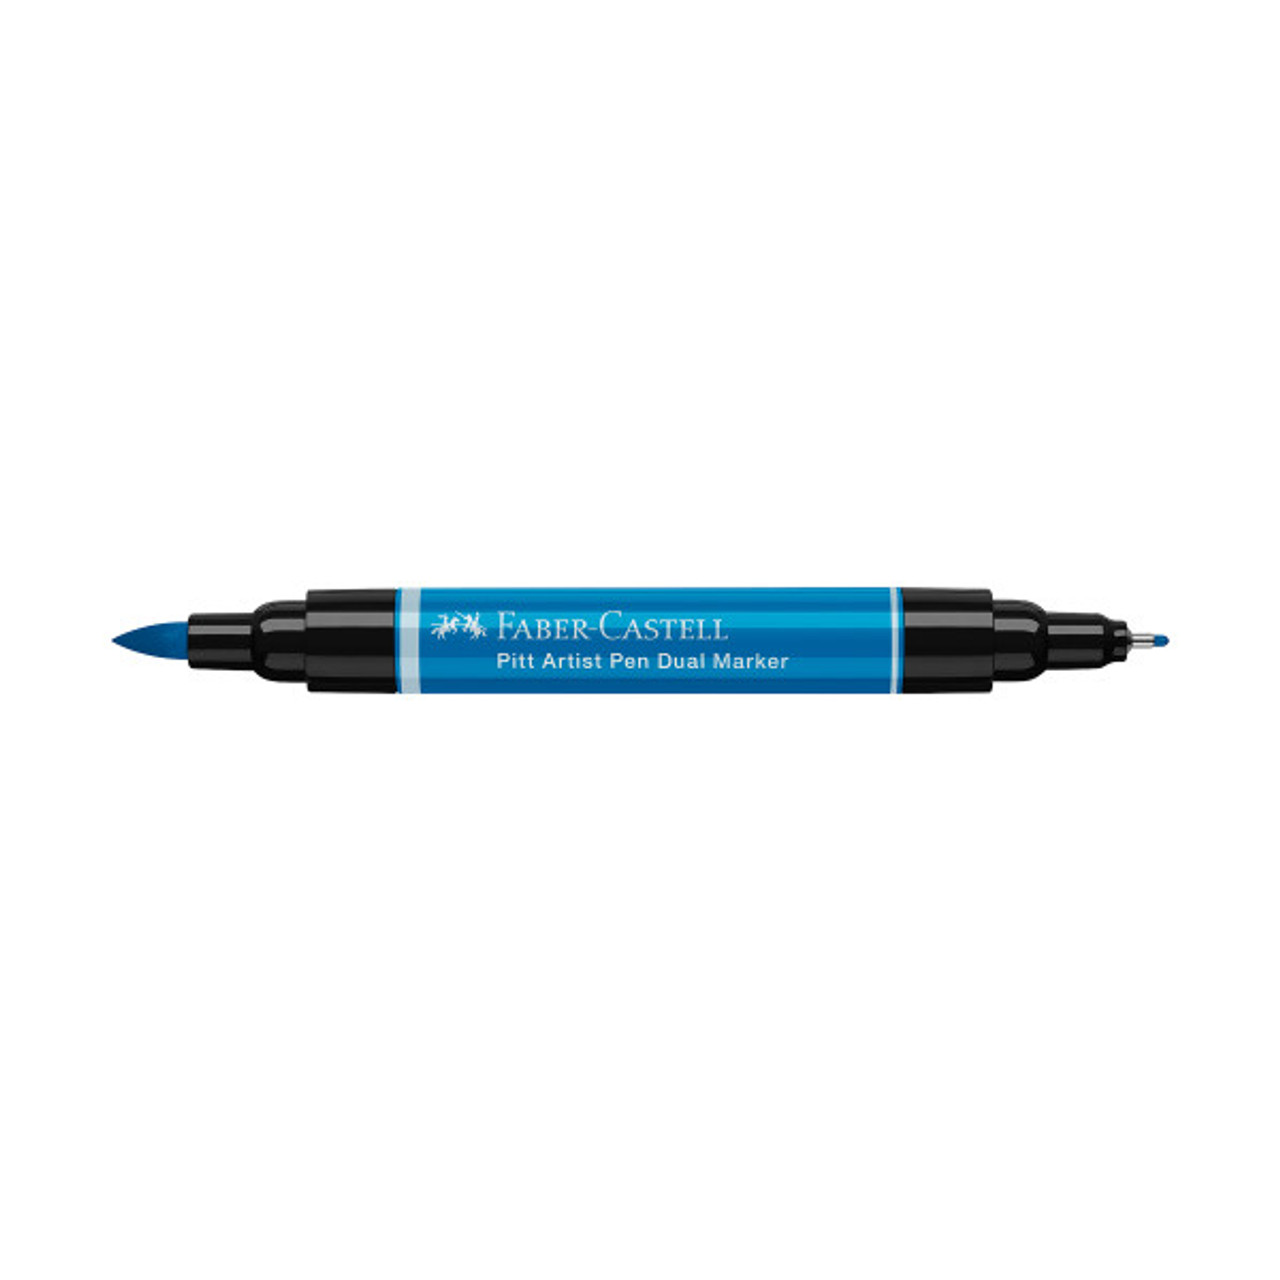 110 Phthalo Blue - Buy 4, Get 1 Free - Pitt Artist Pen Dual Marker - Faber Castell